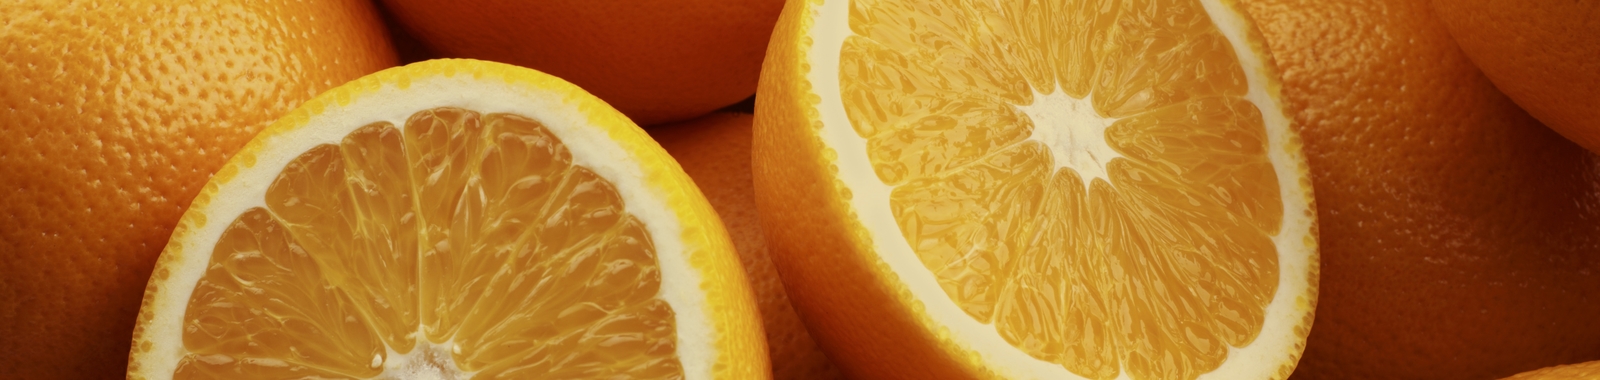 Increasing citrus fruit number